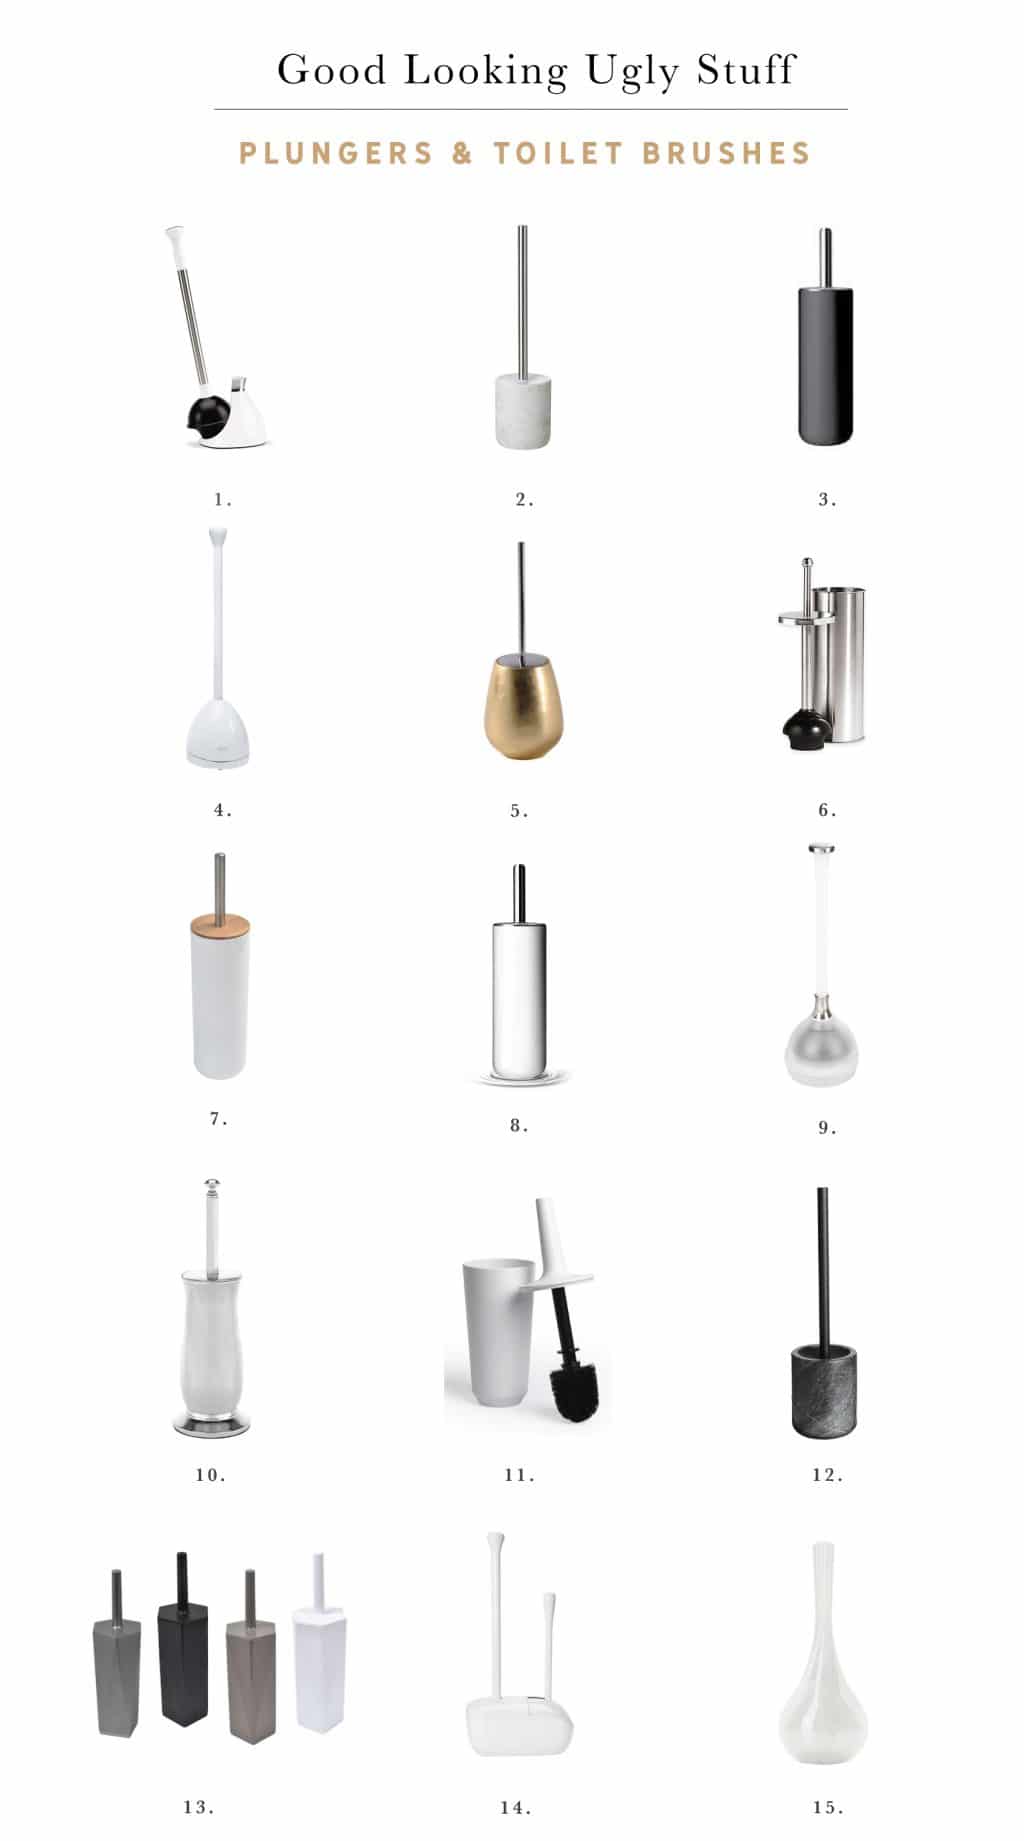 https://www.chrislovesjulia.com/wp-content/uploads/2018/04/plungers-and-toilet-brushes.jpg